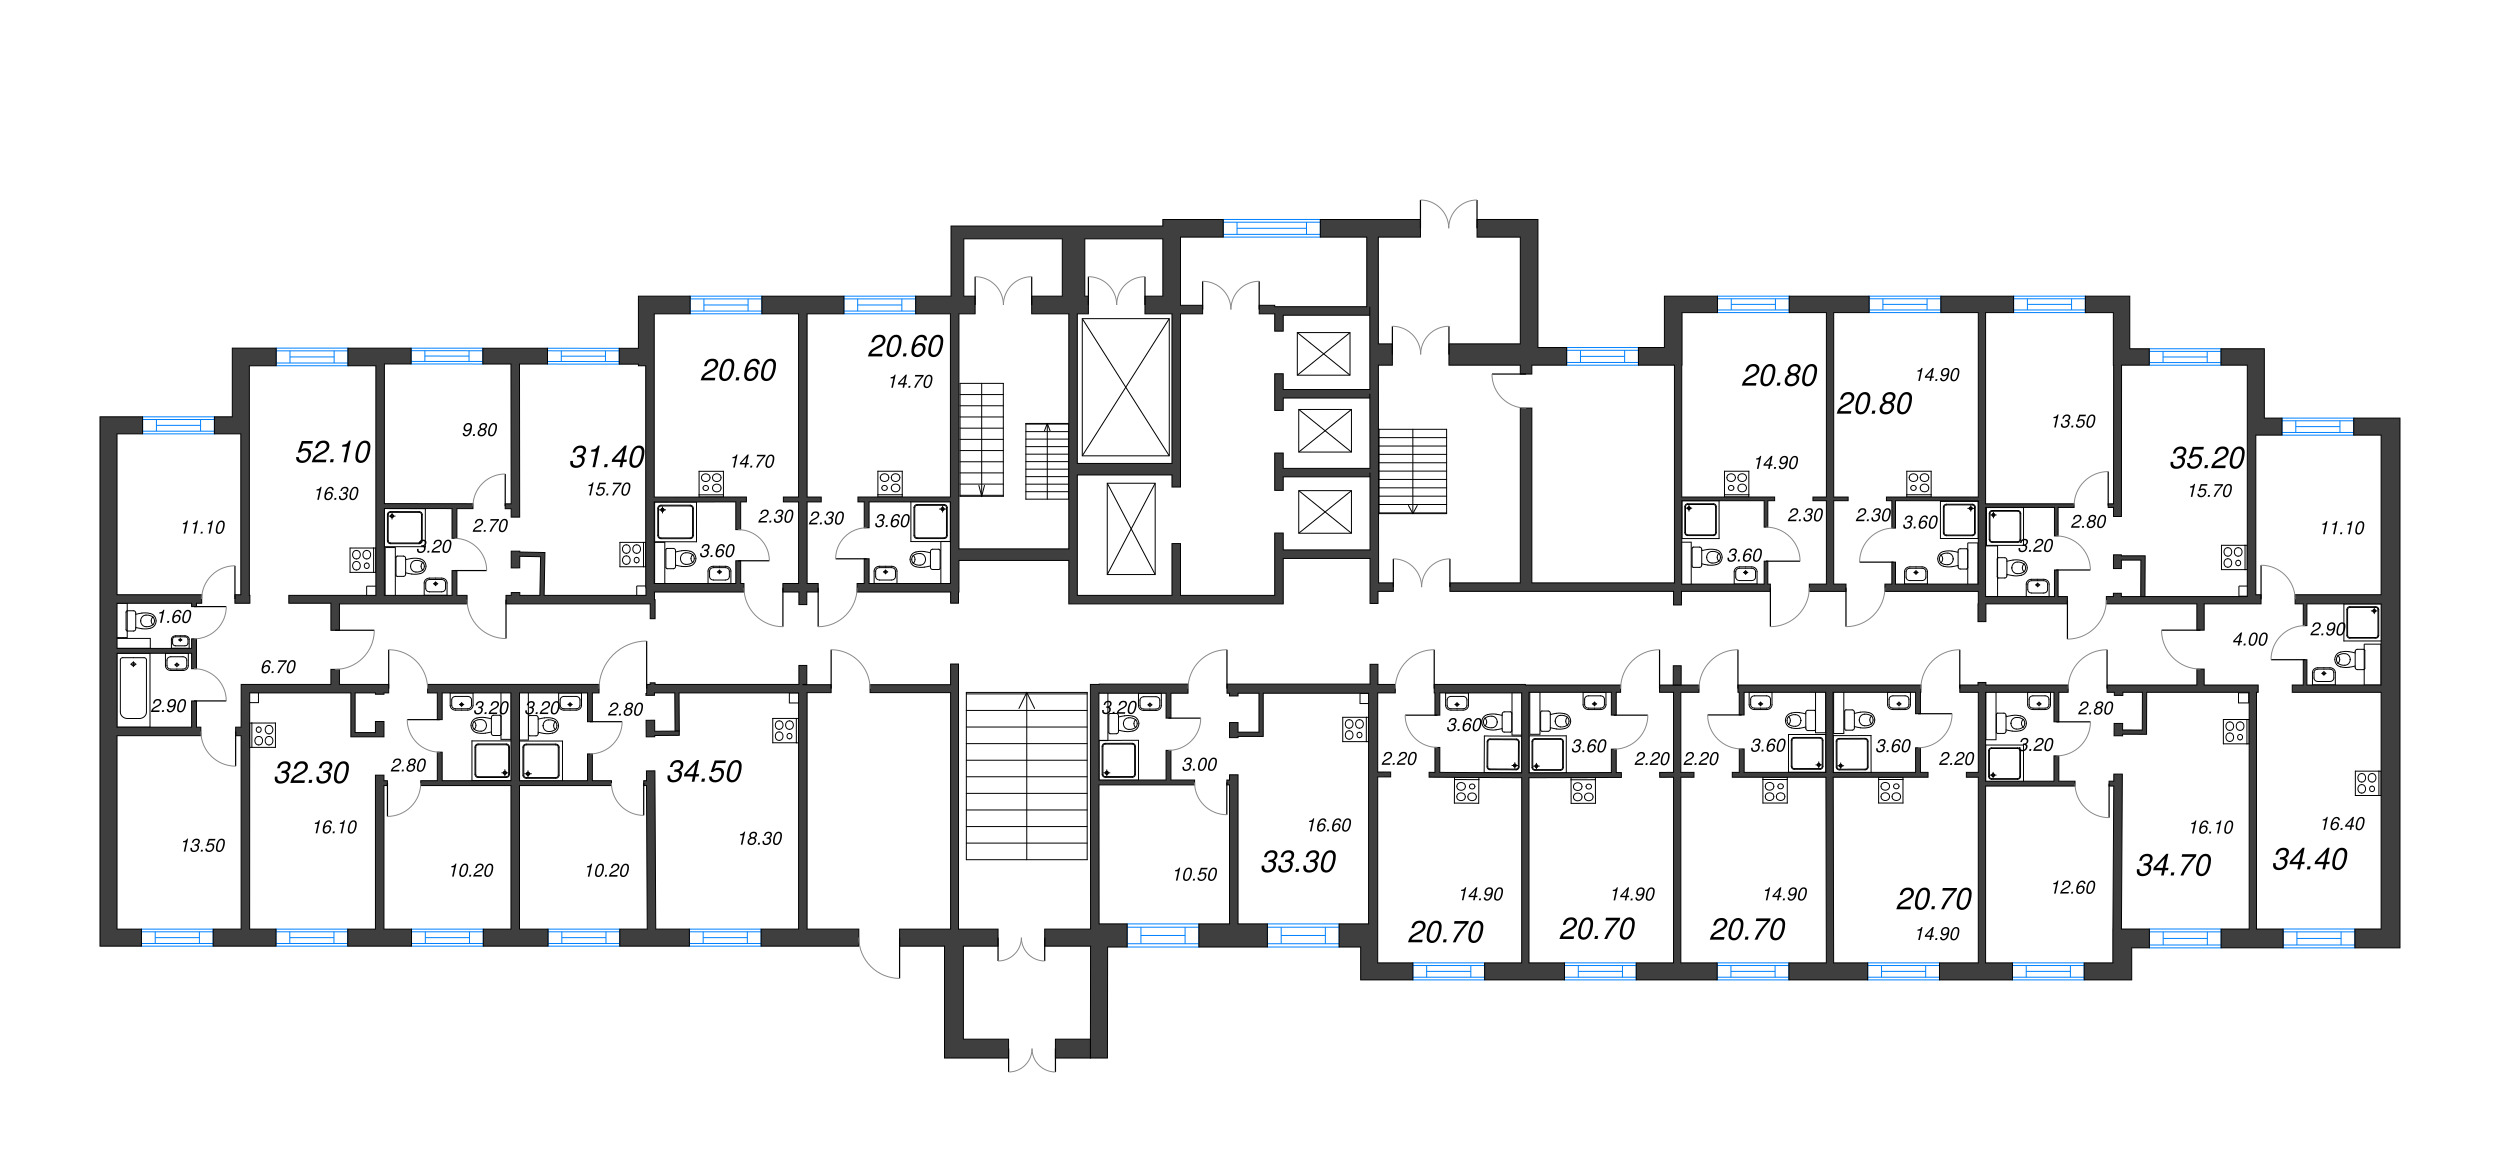 2-комнатная (Евро) квартира, 31.4 м² - планировка этажа